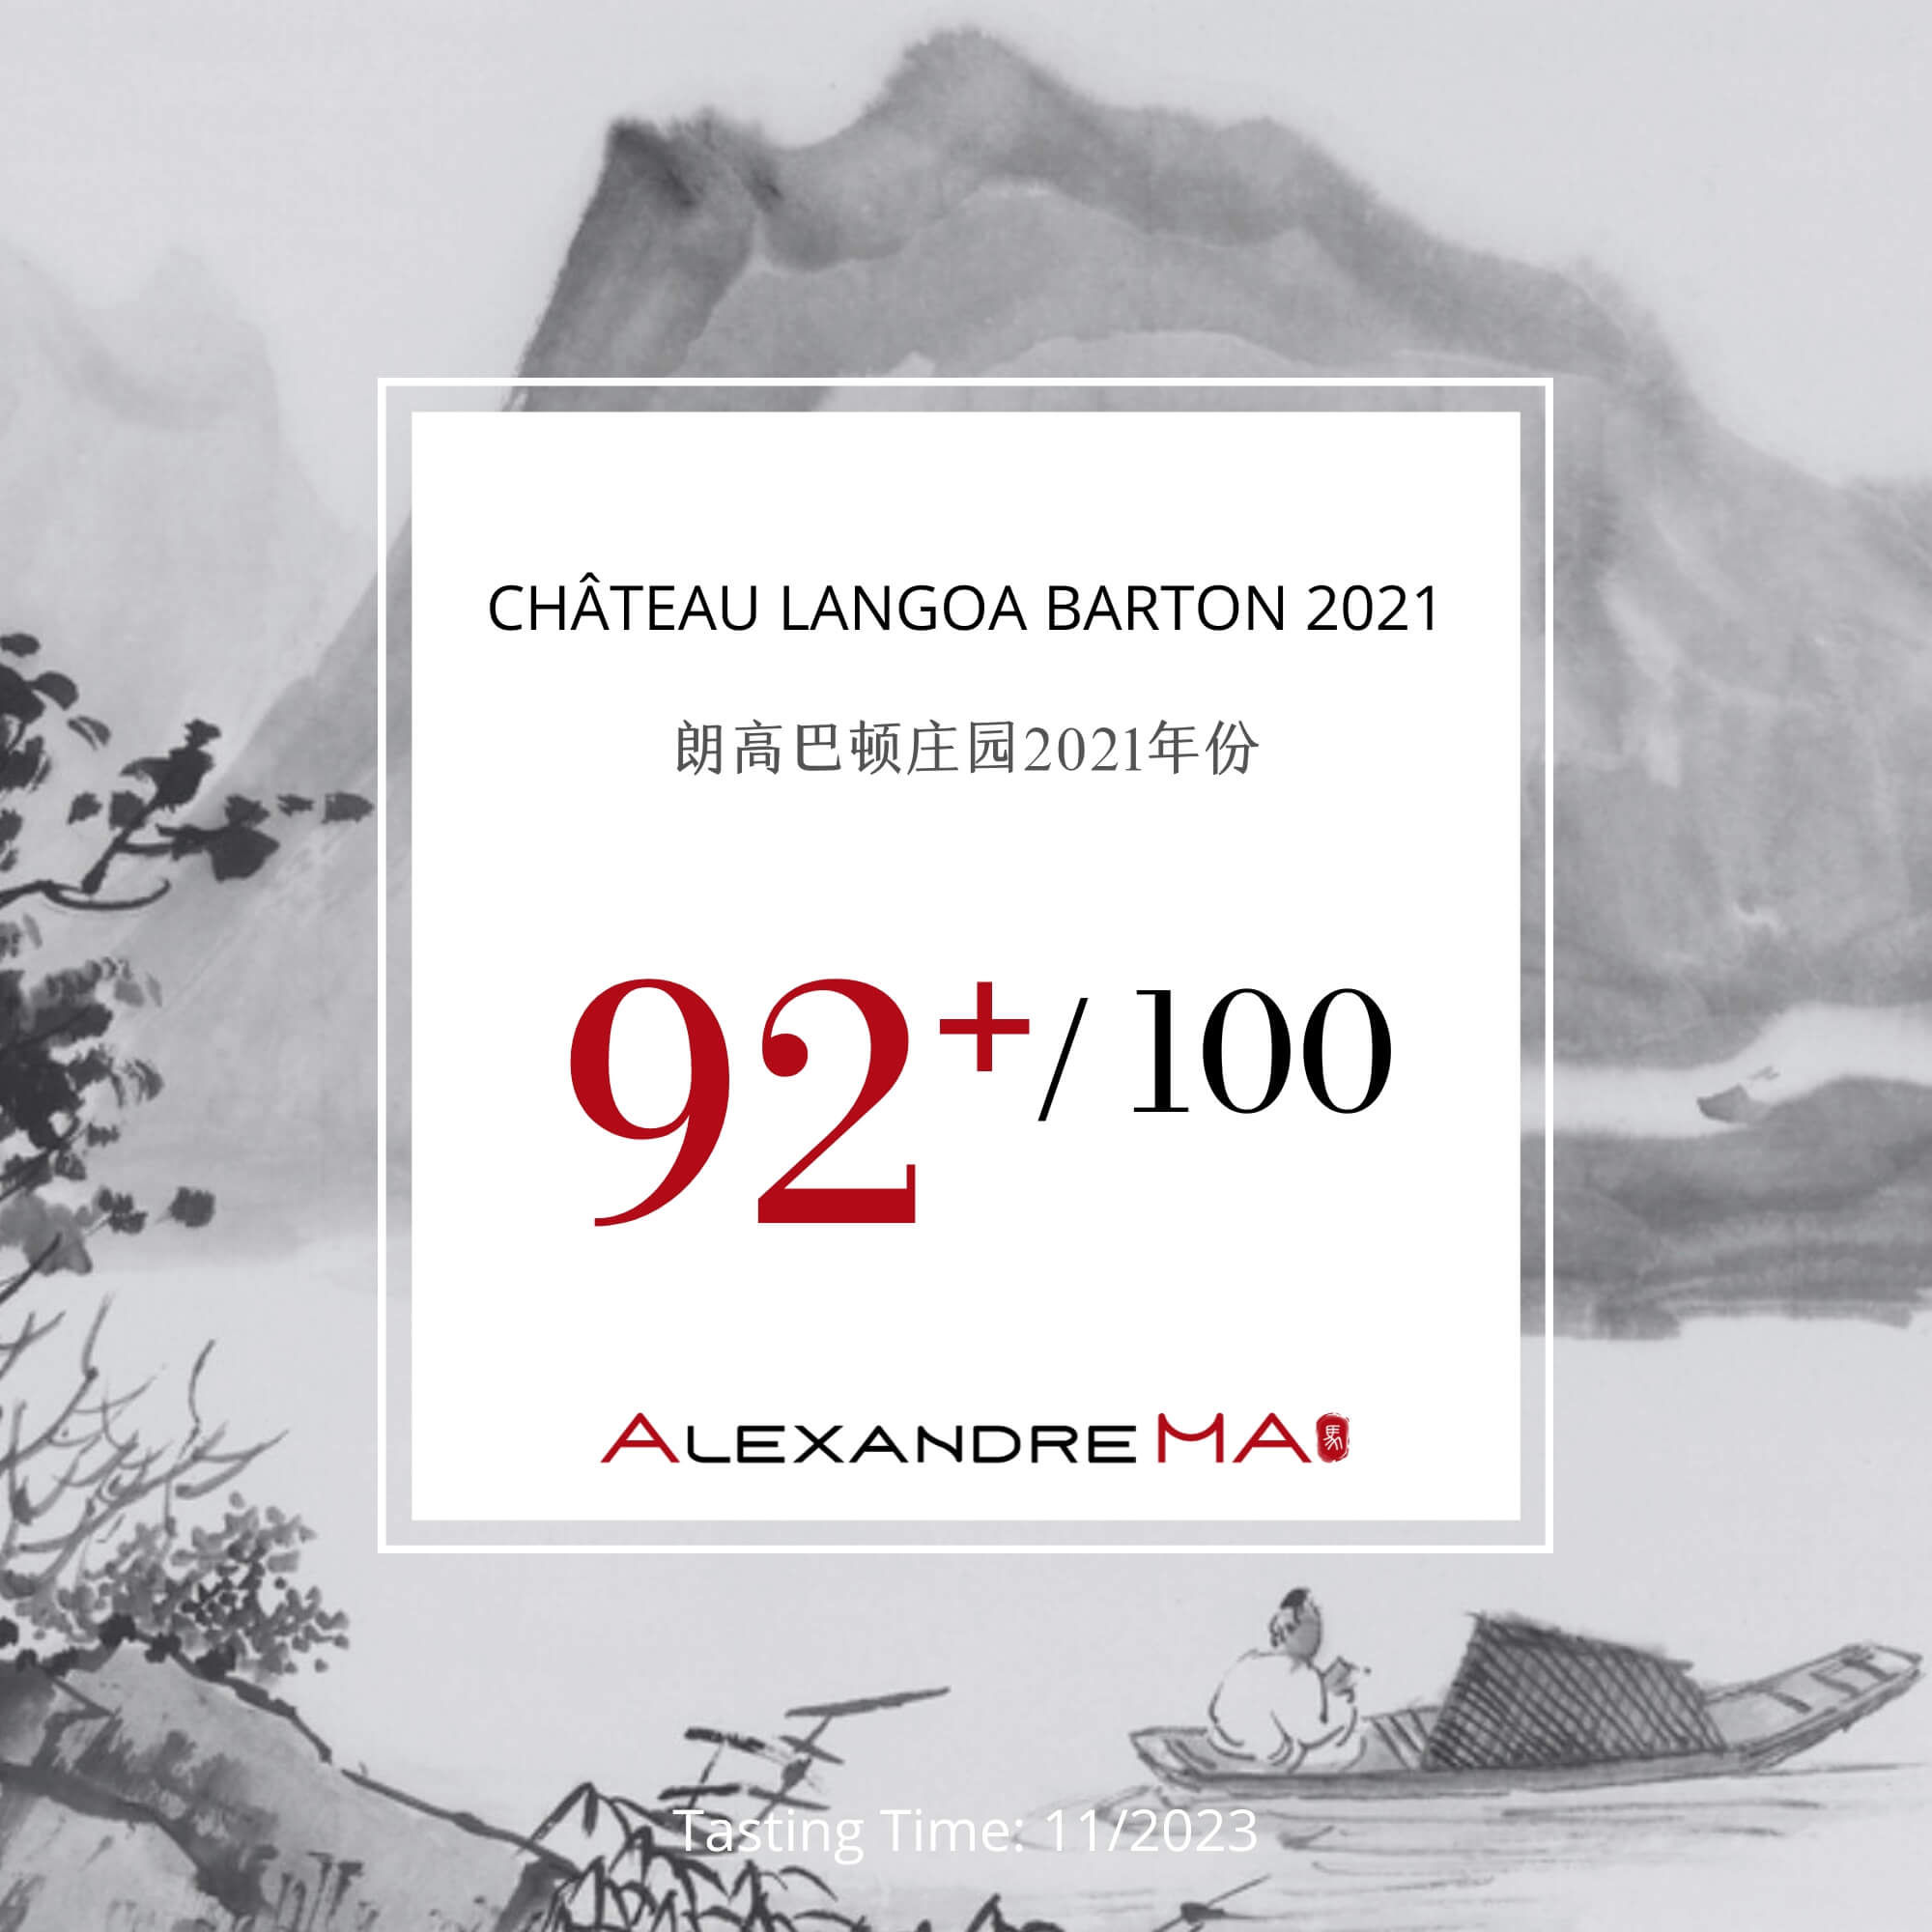 Château Langoa Barton 2021 - Alexandre MA